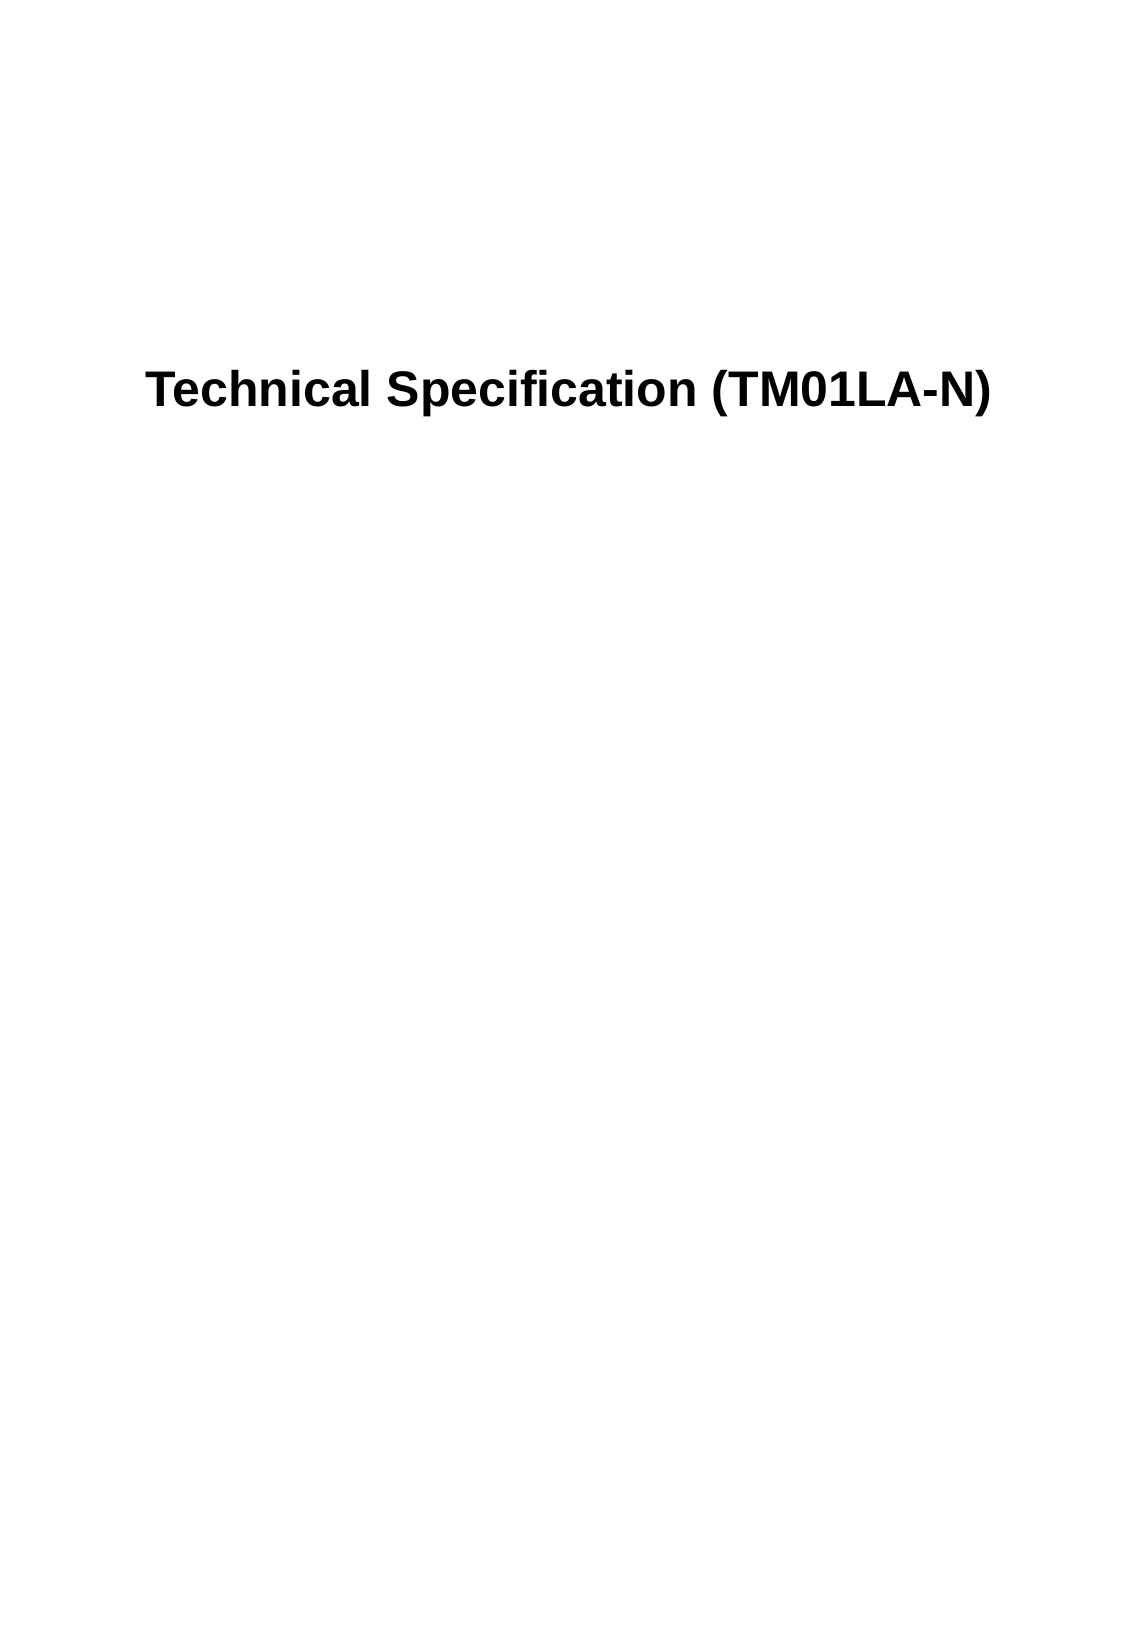    Technical Specification (TM01LA-N)                           